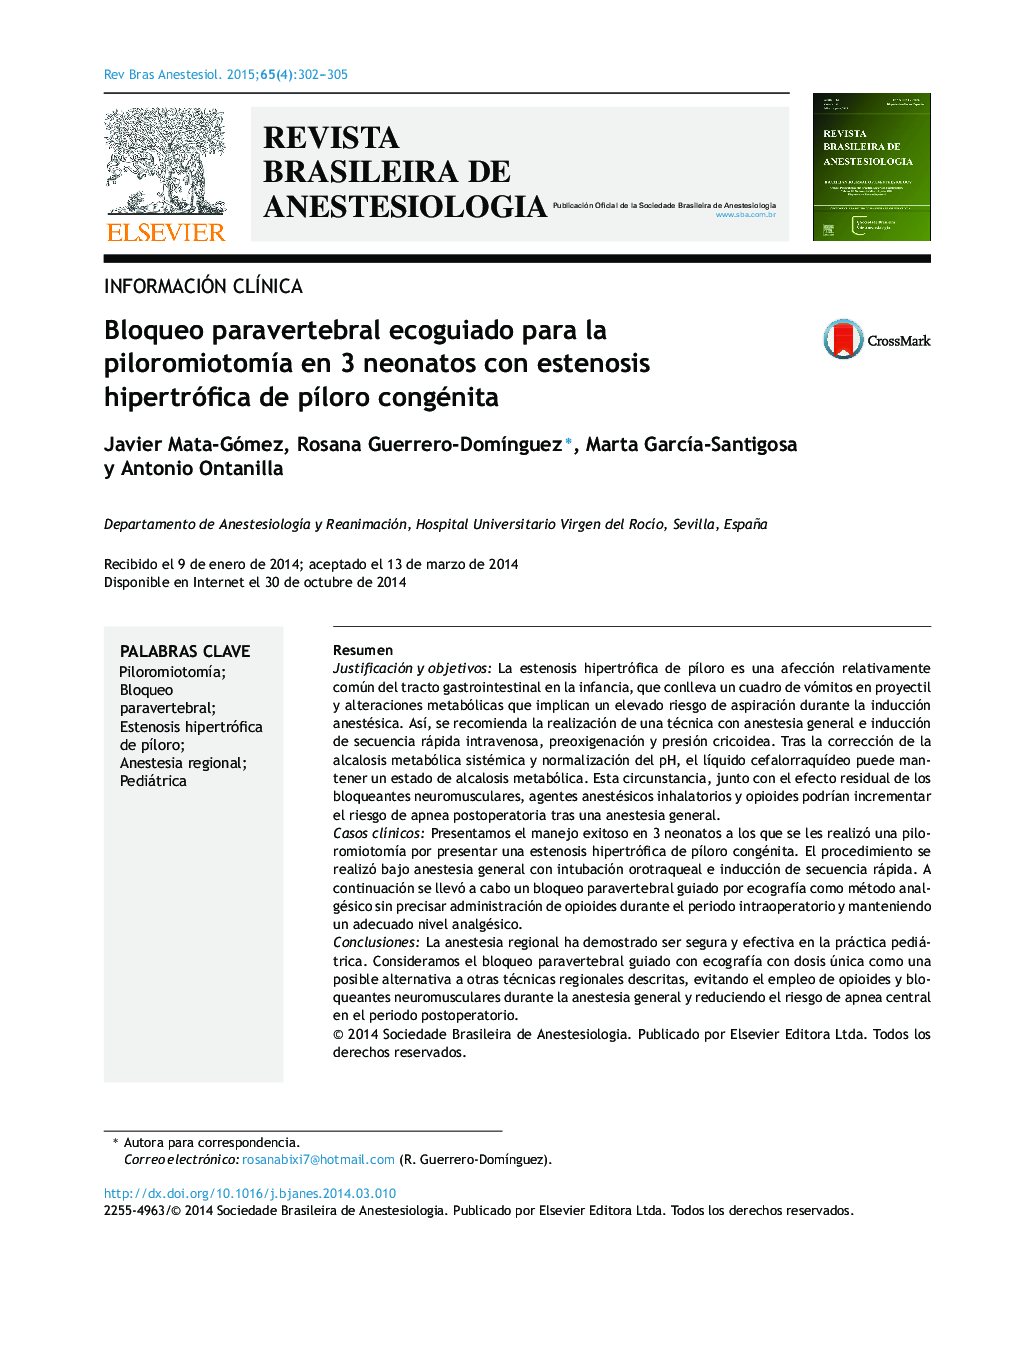 Bloqueo paravertebral ecoguiado para la piloromiotomía en 3 neonatos con estenosis hipertrófica de píloro congénita